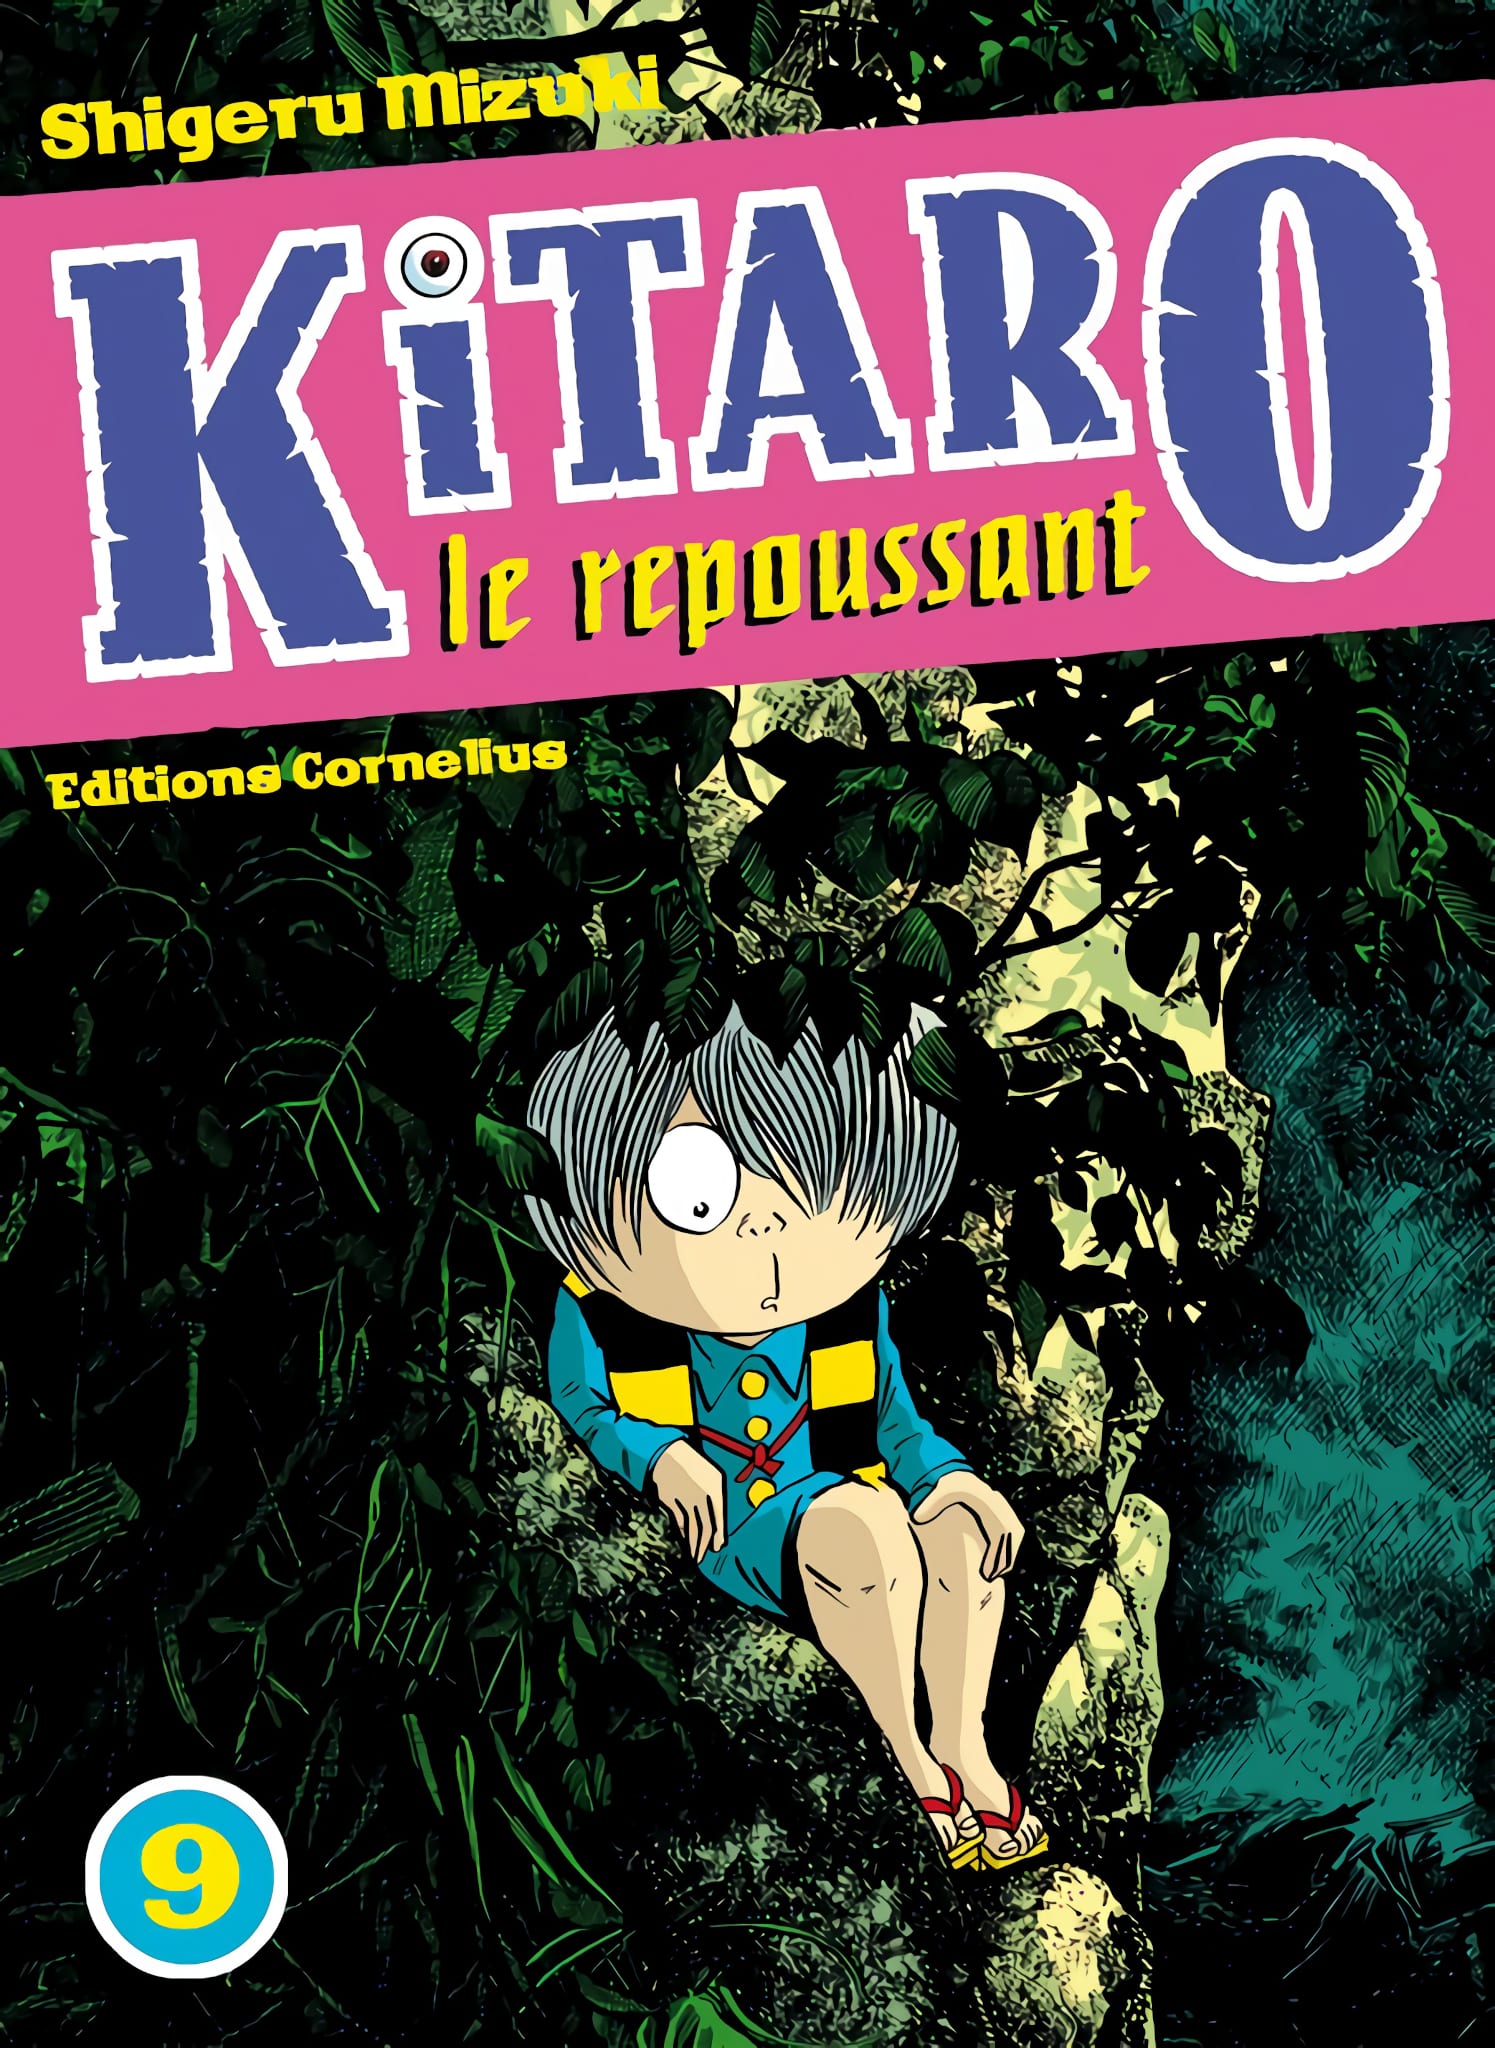 Tome 9 du manga Kitaro le repoussant